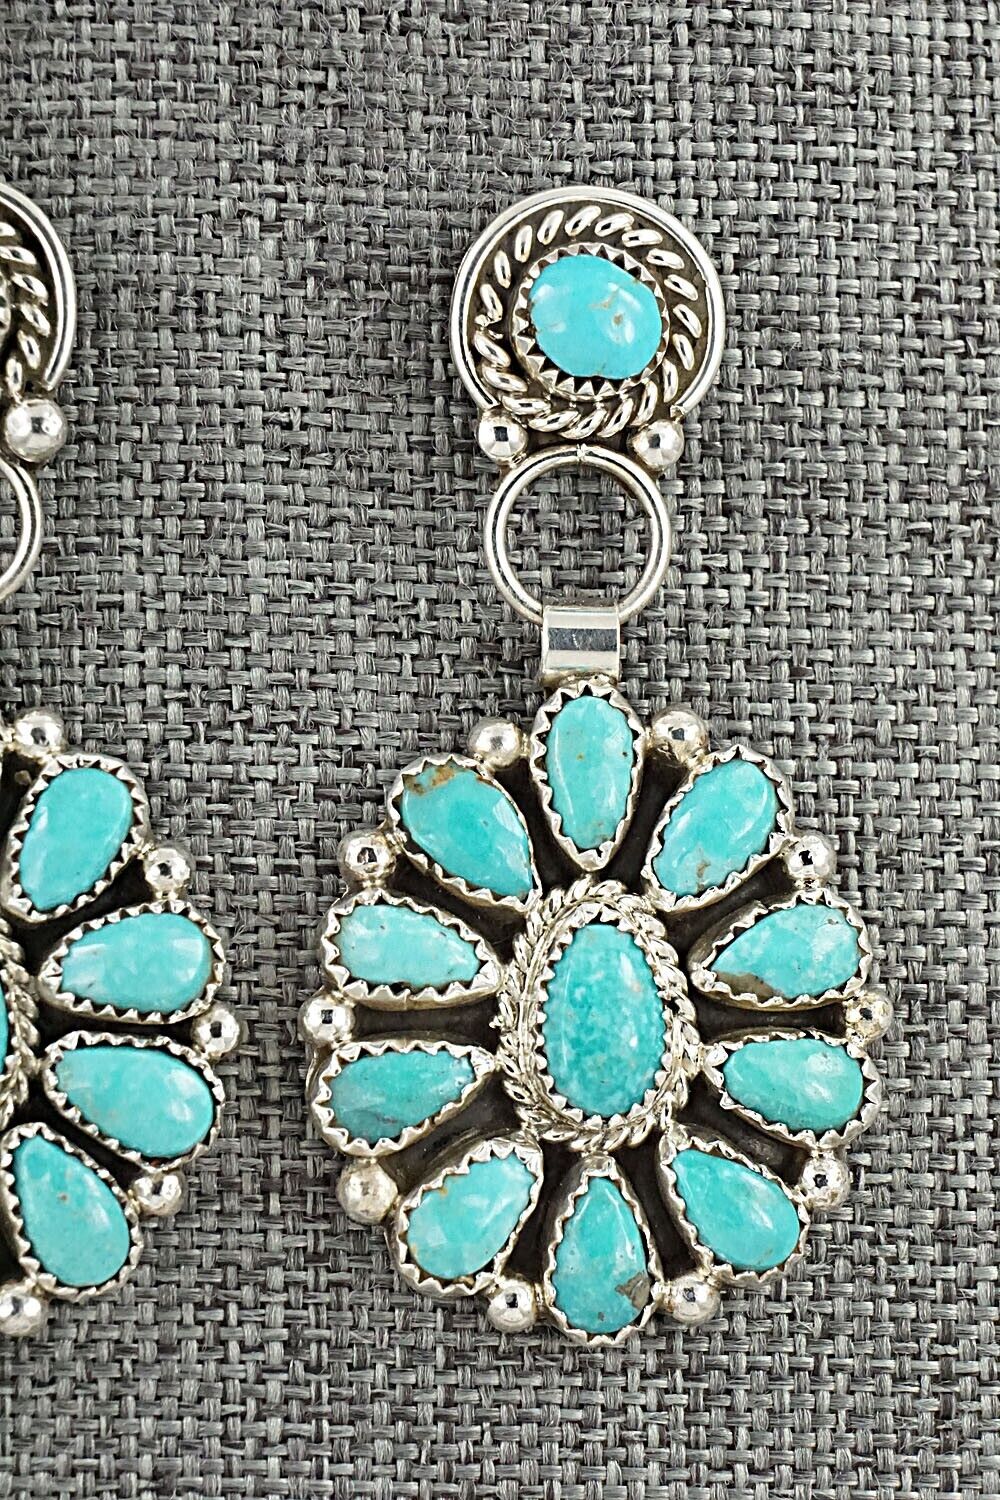 Turquoise & Sterling Silver Earrings - Eunise Wilson